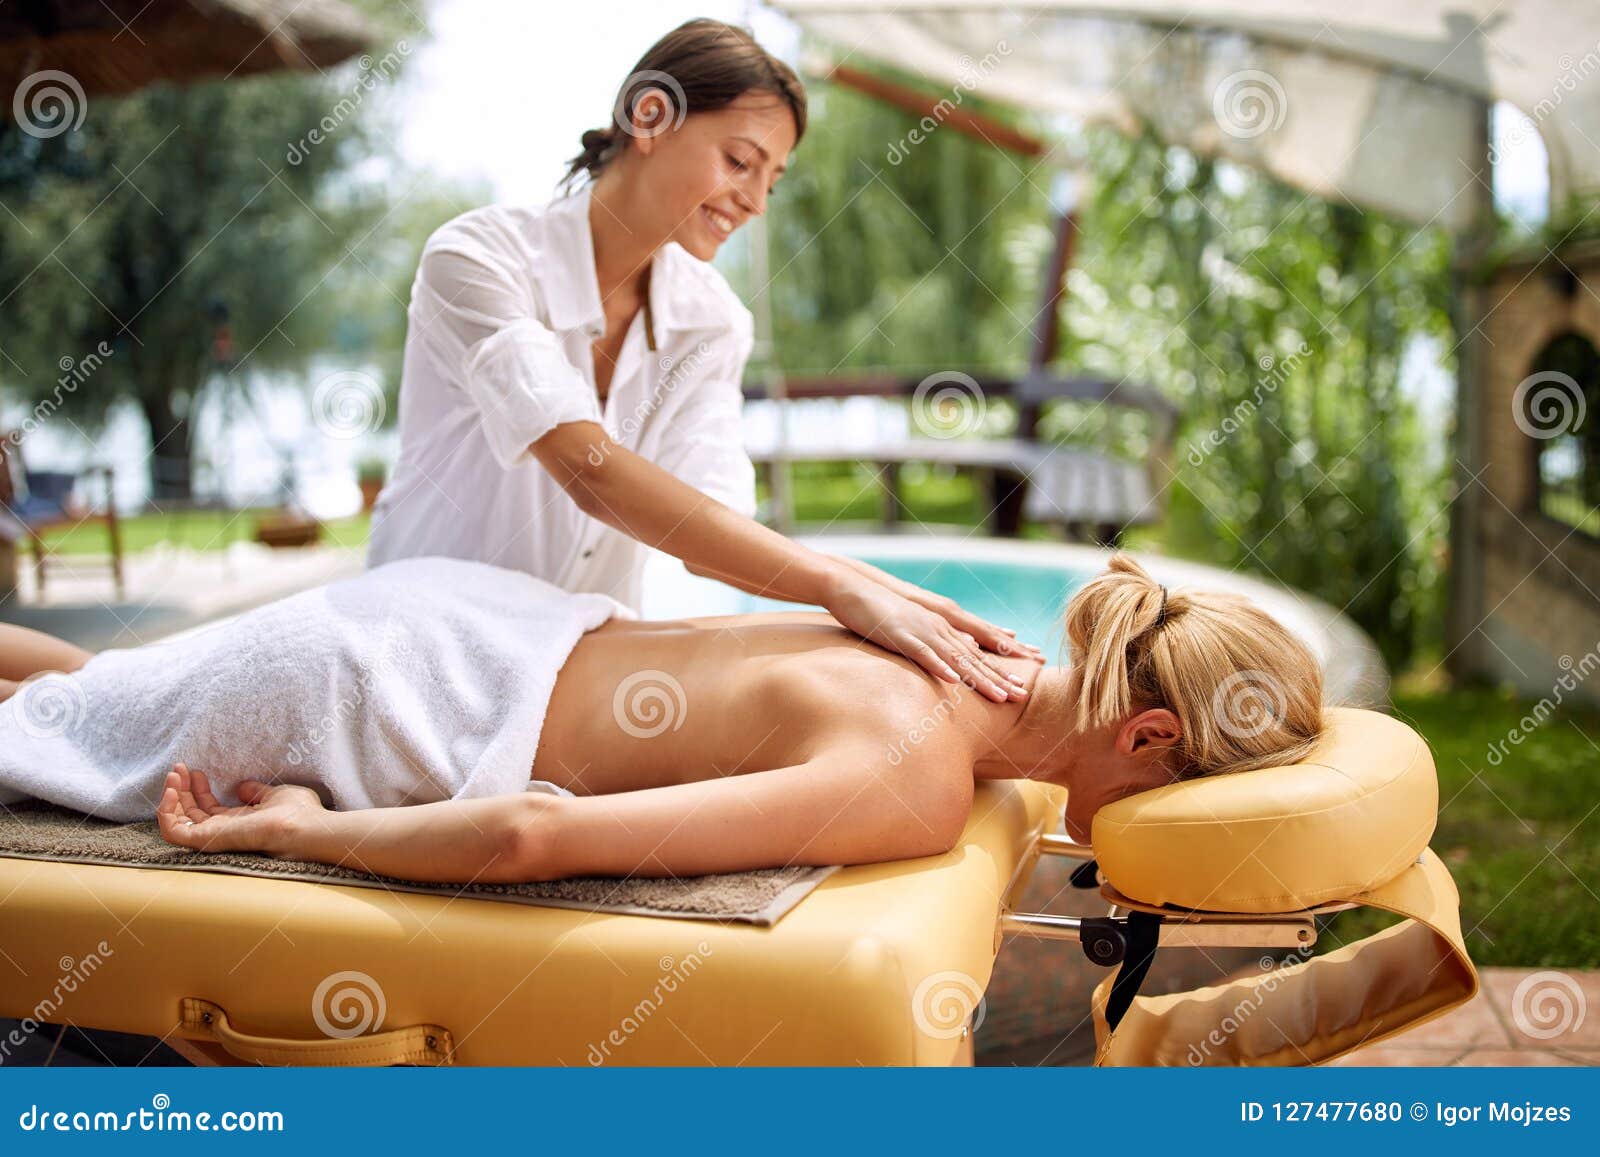 corrine kaster add where to get full body massage photo